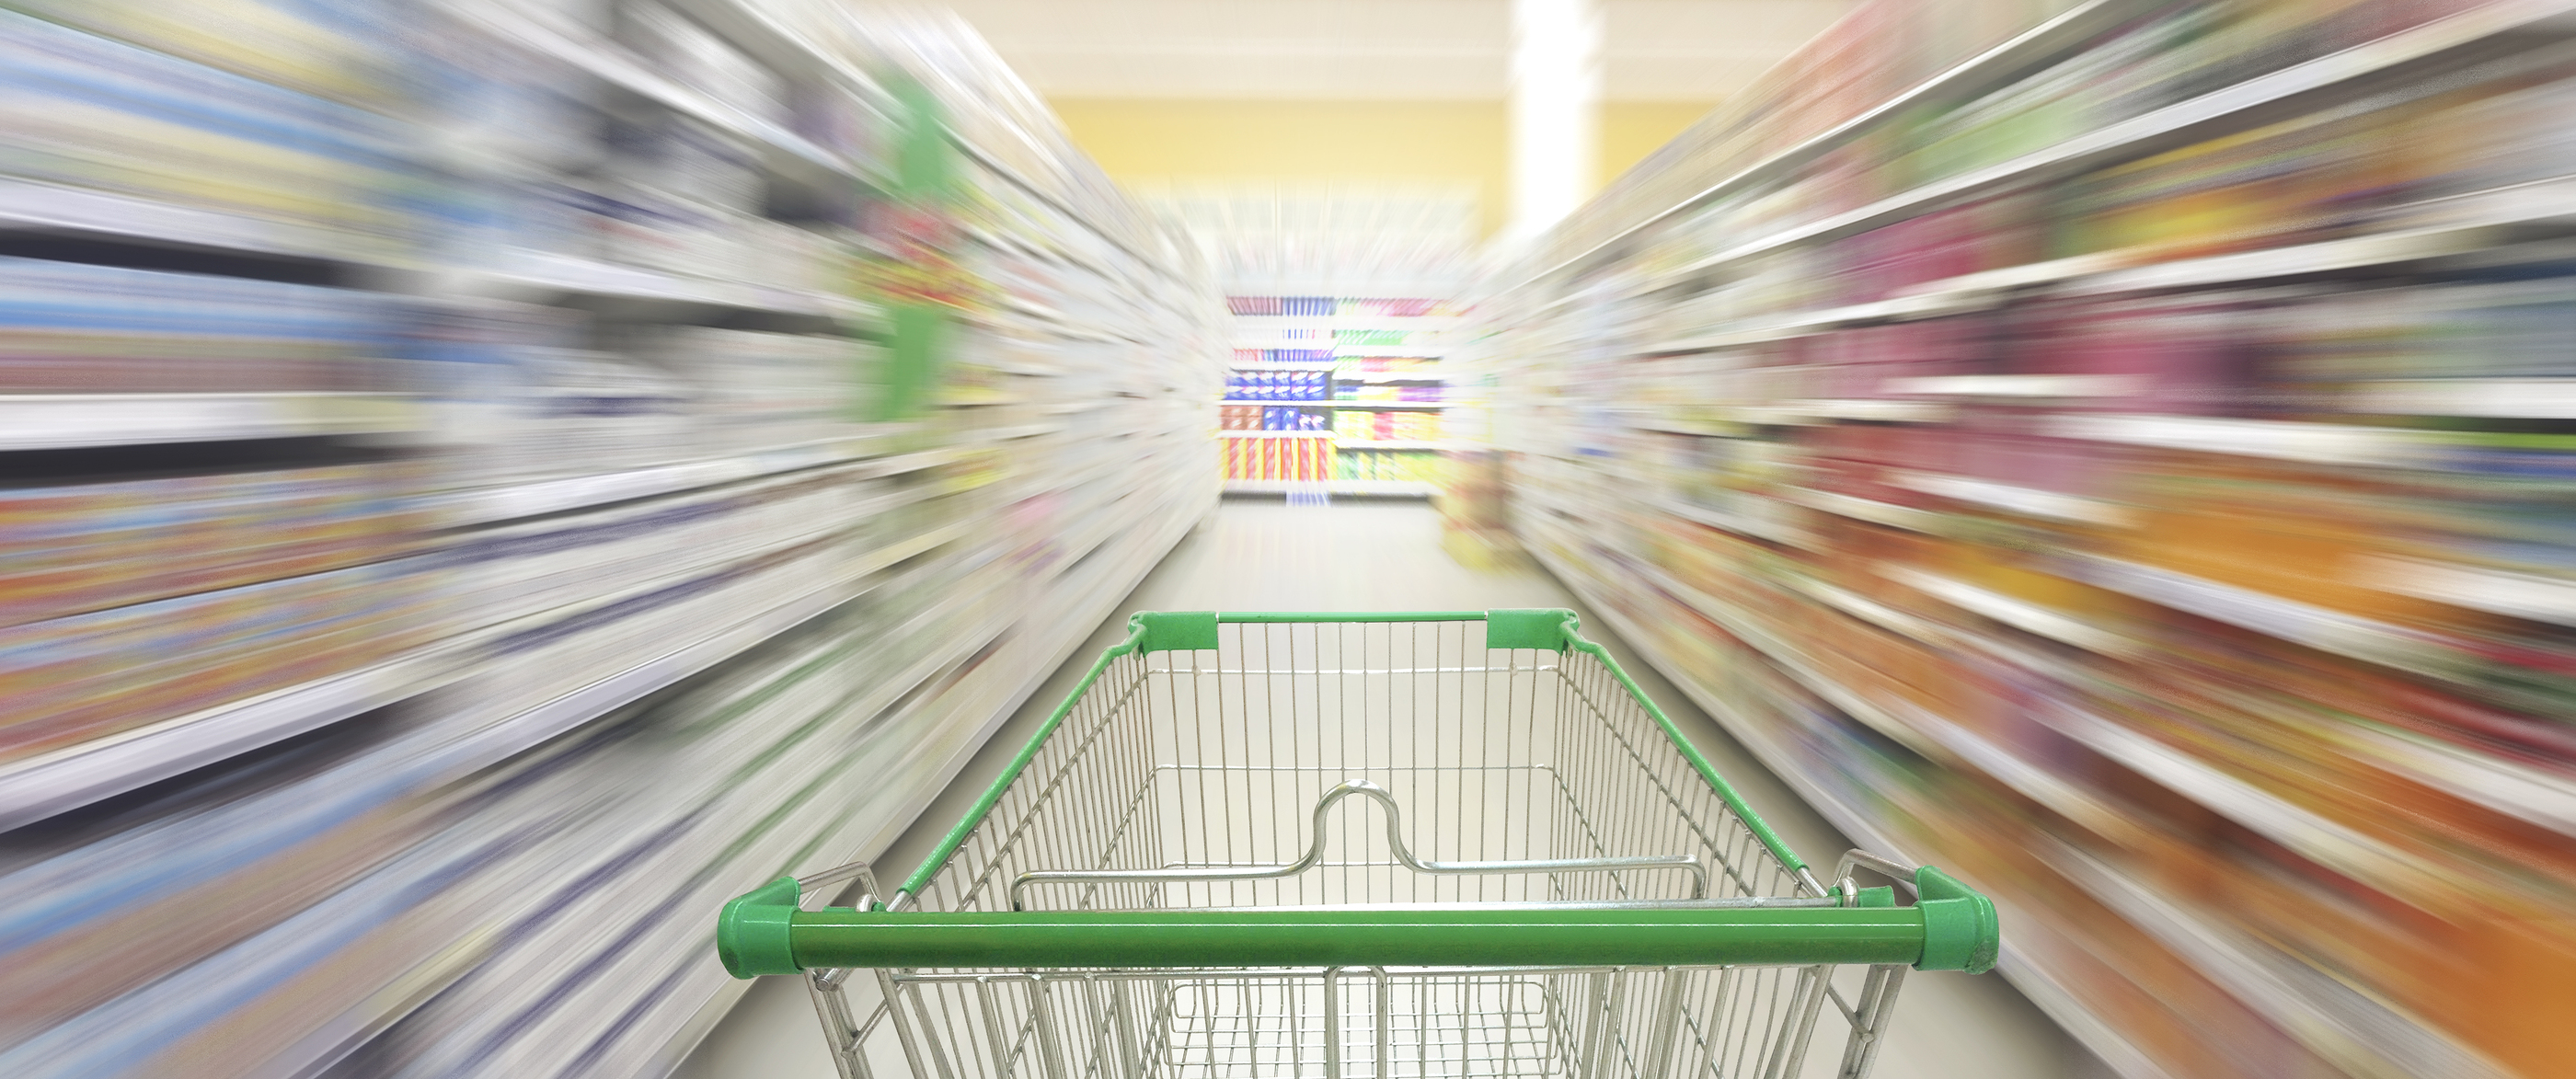 Decreto 9.127/2017 autoriza abertura de Supermercados Varejos aos Domingos